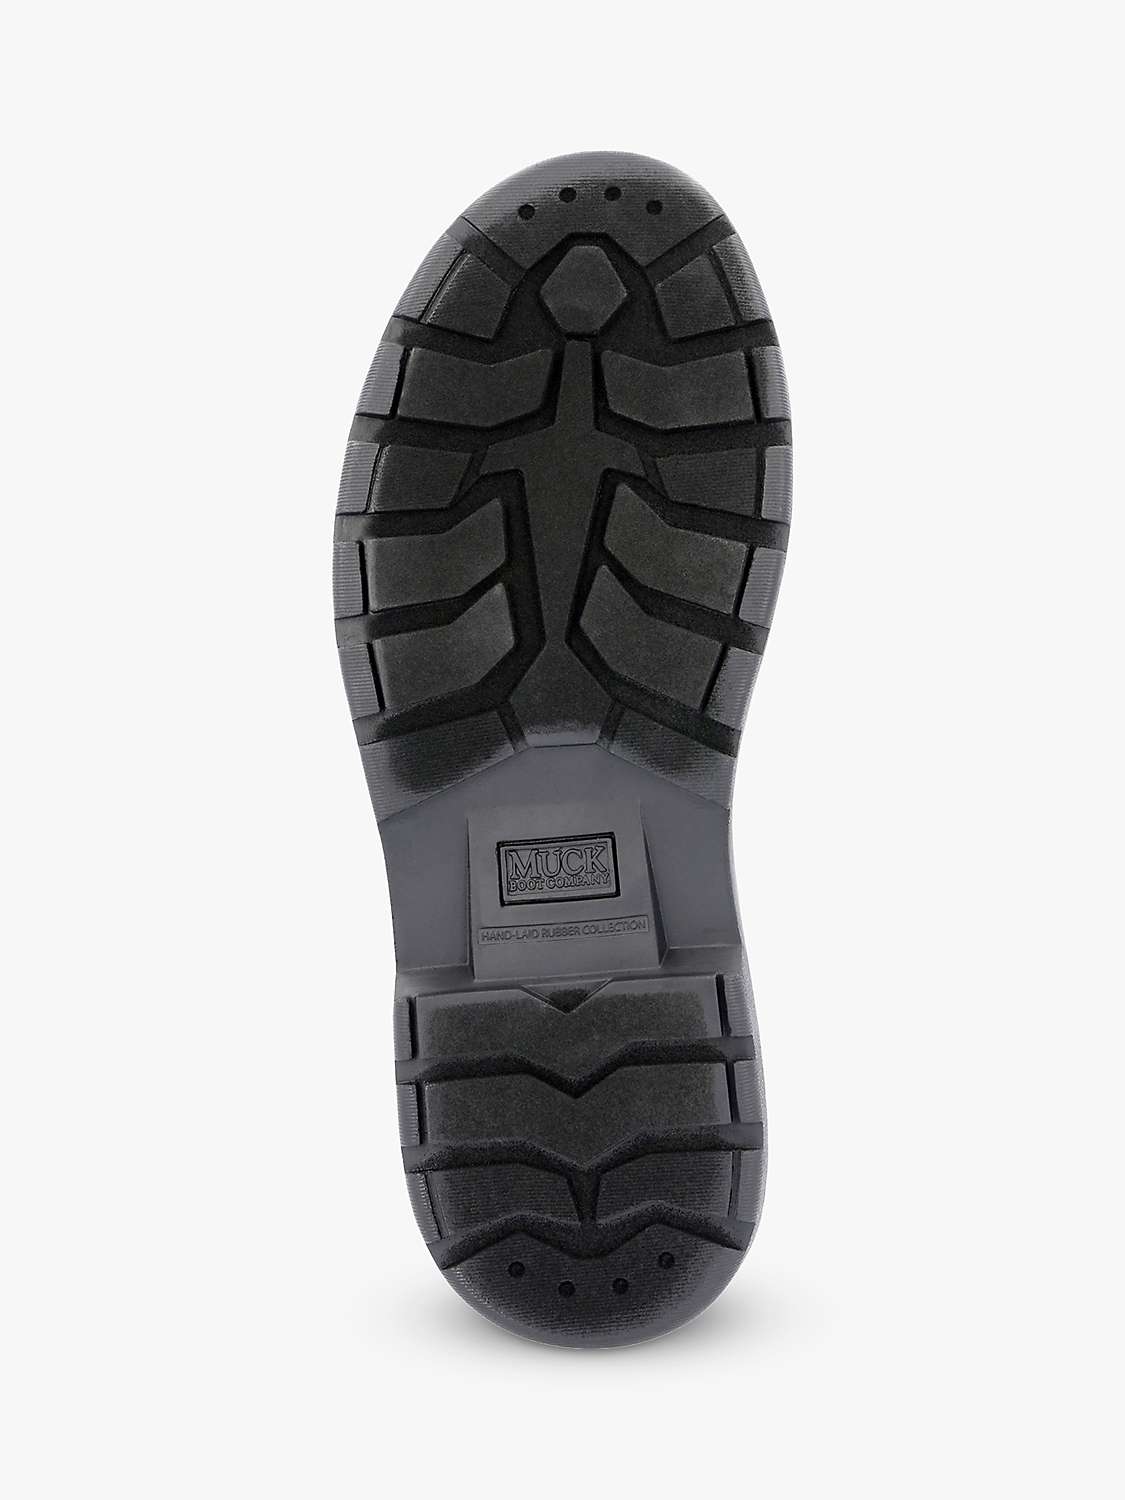 Buy Muck Originals Ankle Wellington Boots Online at johnlewis.com